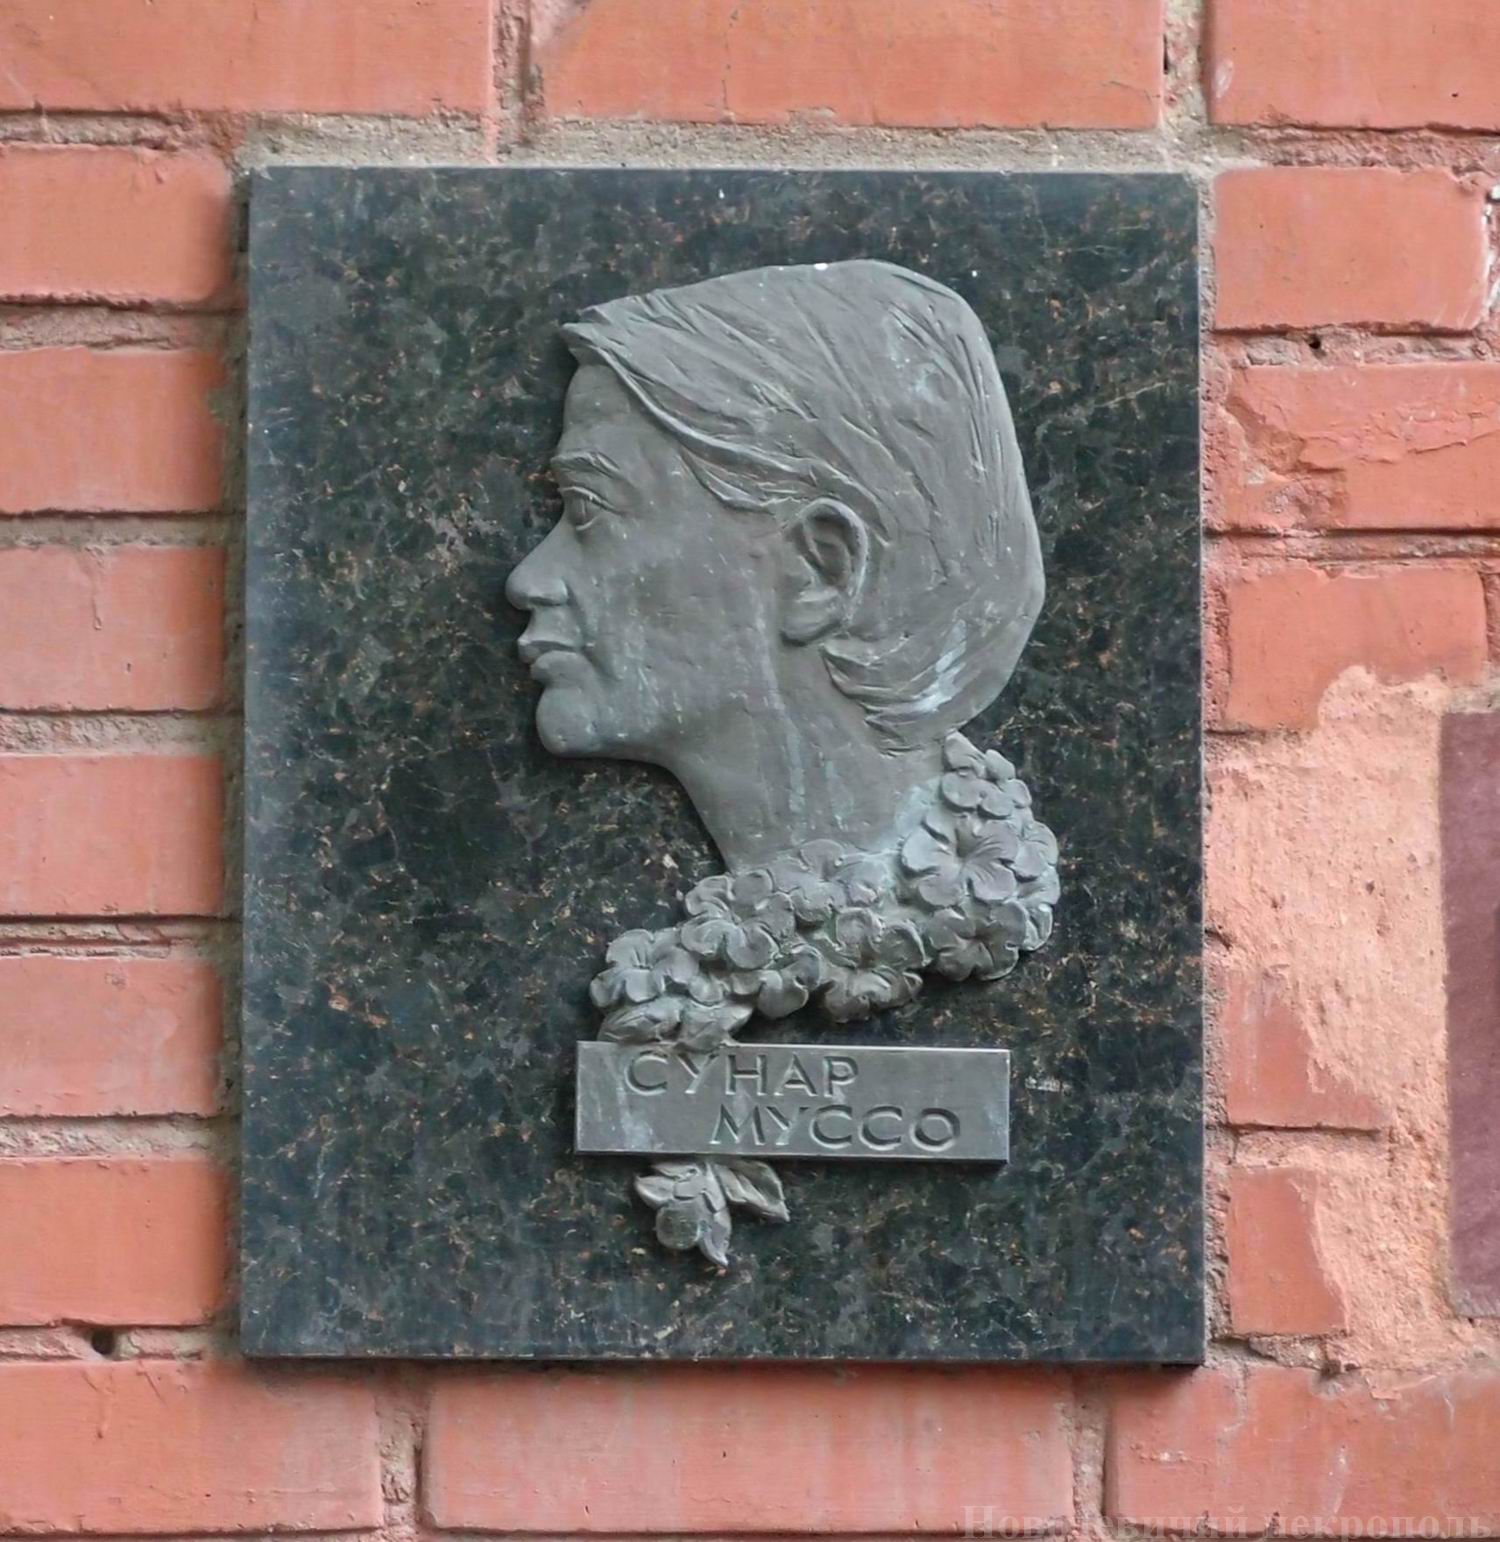 Плита на нише Муссо Сунар (1929-1971), на Новодевичьем кладбище (колумбарий [136]-17-2).